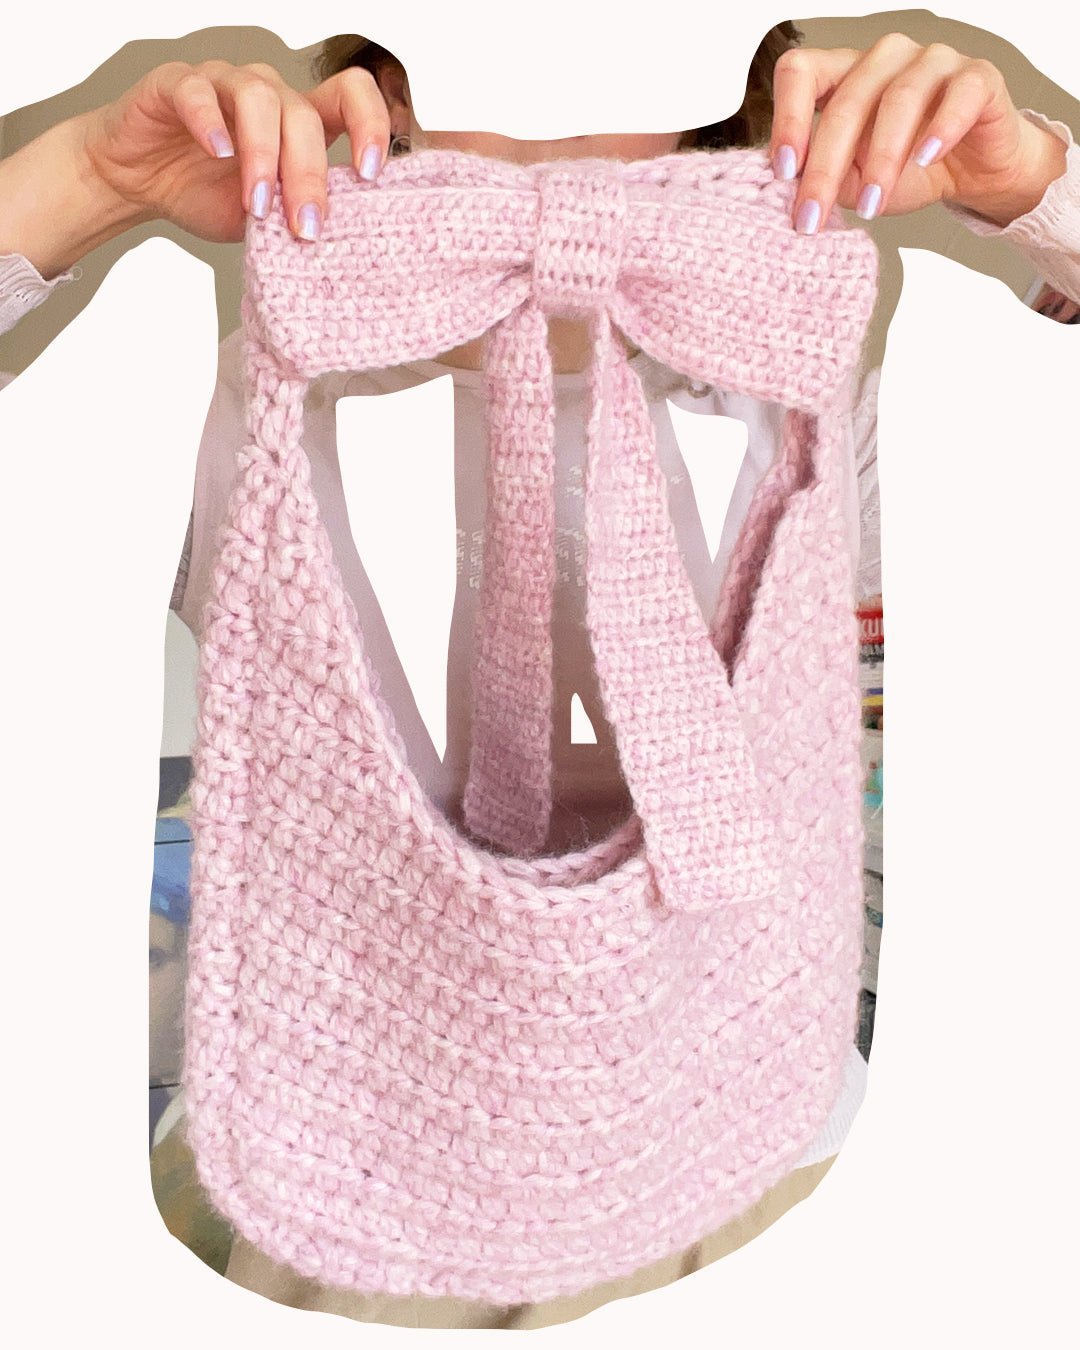 Tote Bag Crochet Pattern